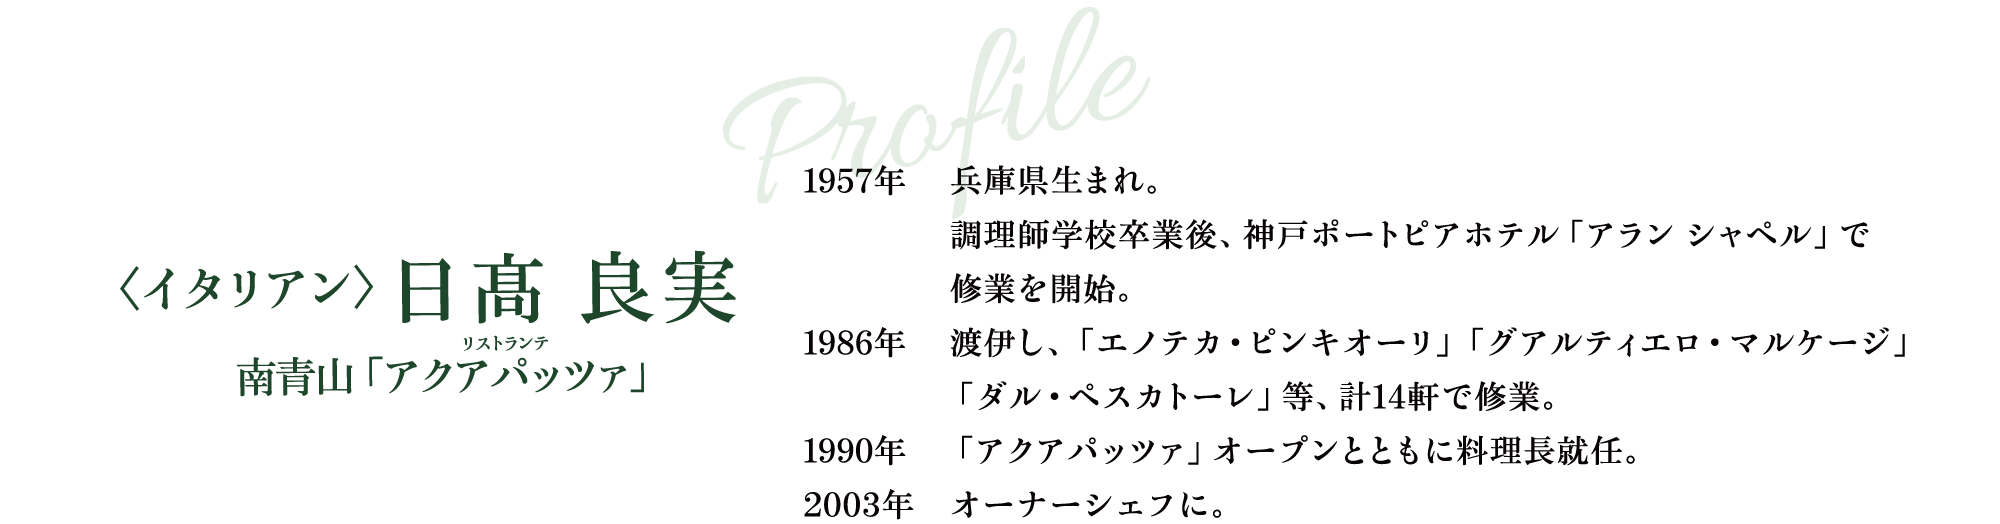 Profile 〈イタリアン〉日髙 良実 南青山「アクアパッツァ」 1957年 兵庫県生まれ。調理師学校卒業後、神戸ポートピアホテル「アラン シャペル」で修業を開始。 1986年 渡伊し、「エノテカ・ピンキオーリ」「グアルティエロ・マルケージ」「ダル・ペスカトーレ」等、計14軒で修業。 1990年 「アクアパッツァ」オープンとともに料理長就任。 2003年 オーナーシェフに。 